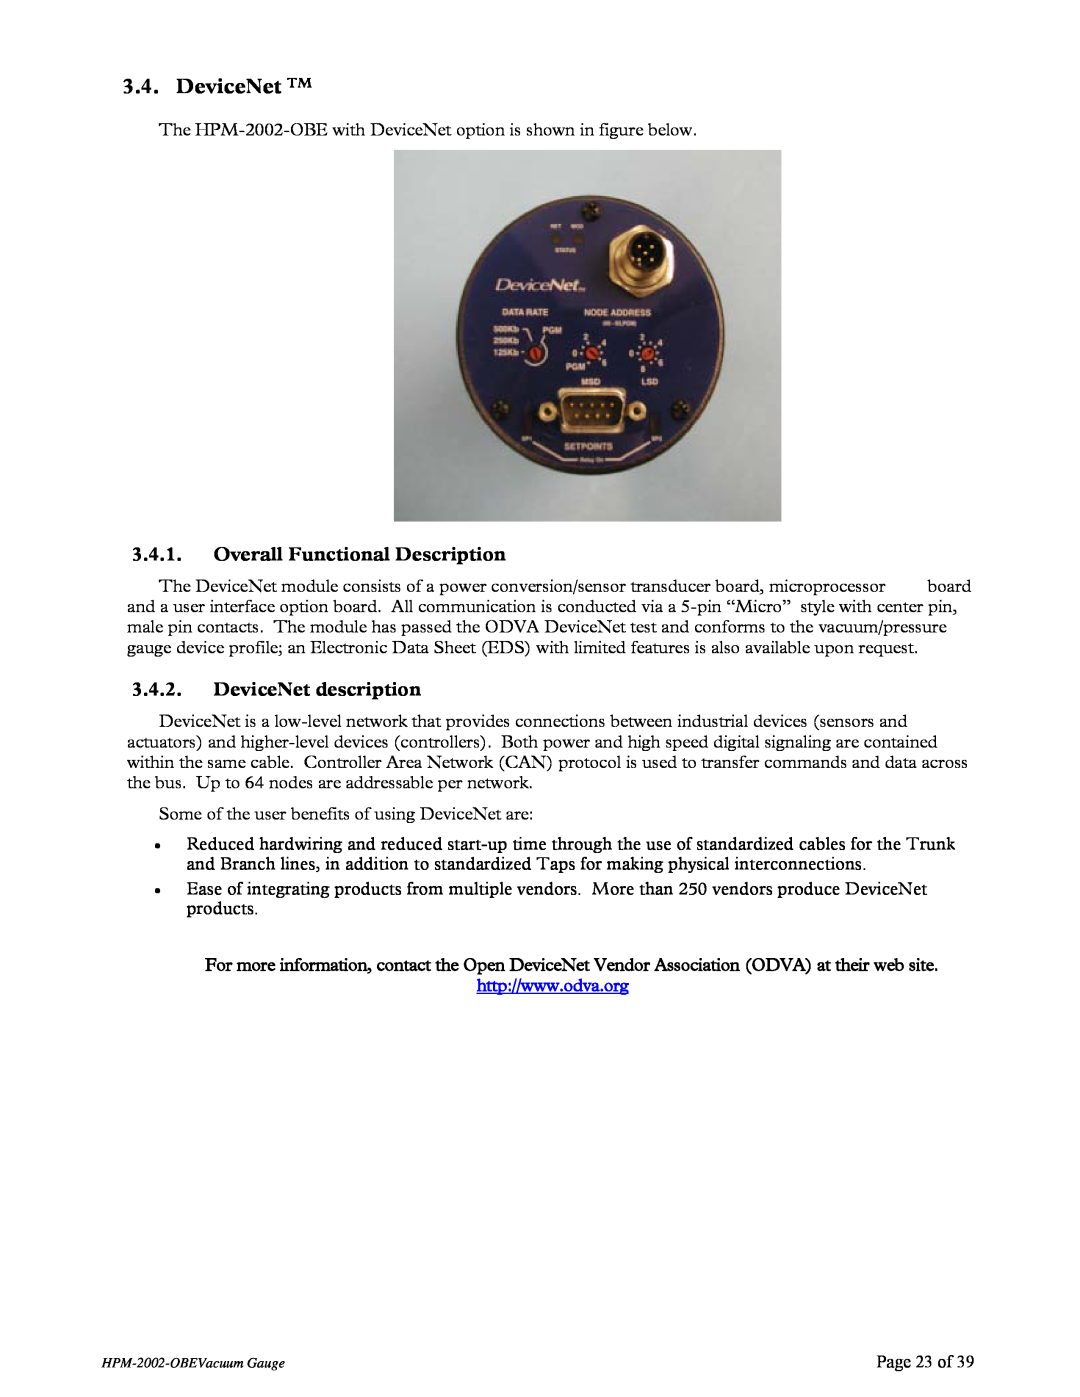 Teledyne HPM-2002-OBE instruction manual DeviceNet TM, Overall Functional Description, DeviceNet description 